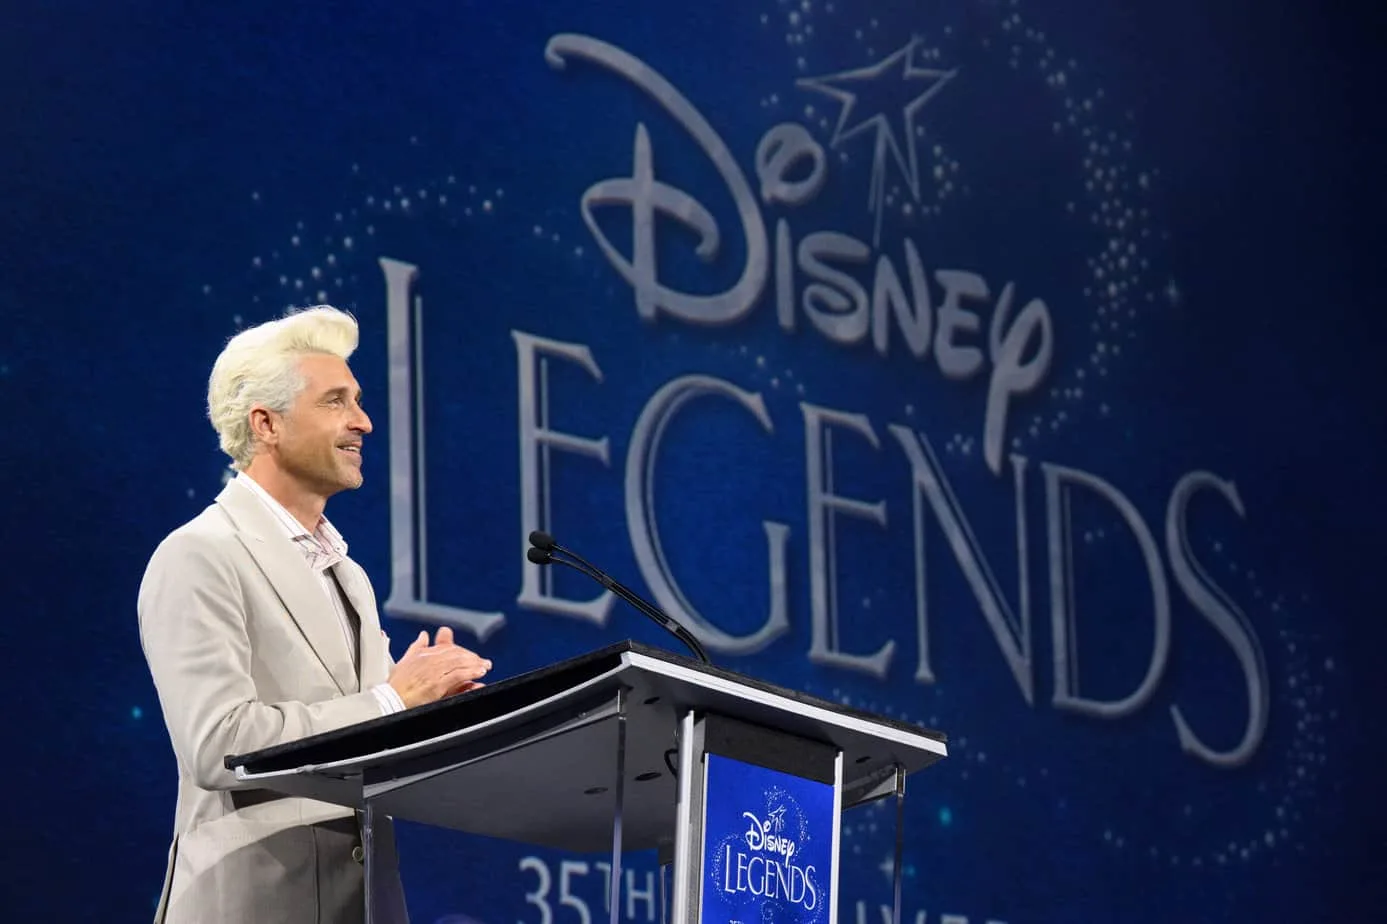 Patrick Dempsey accepting his 2022 Disney Legends Award at D23 Expo.